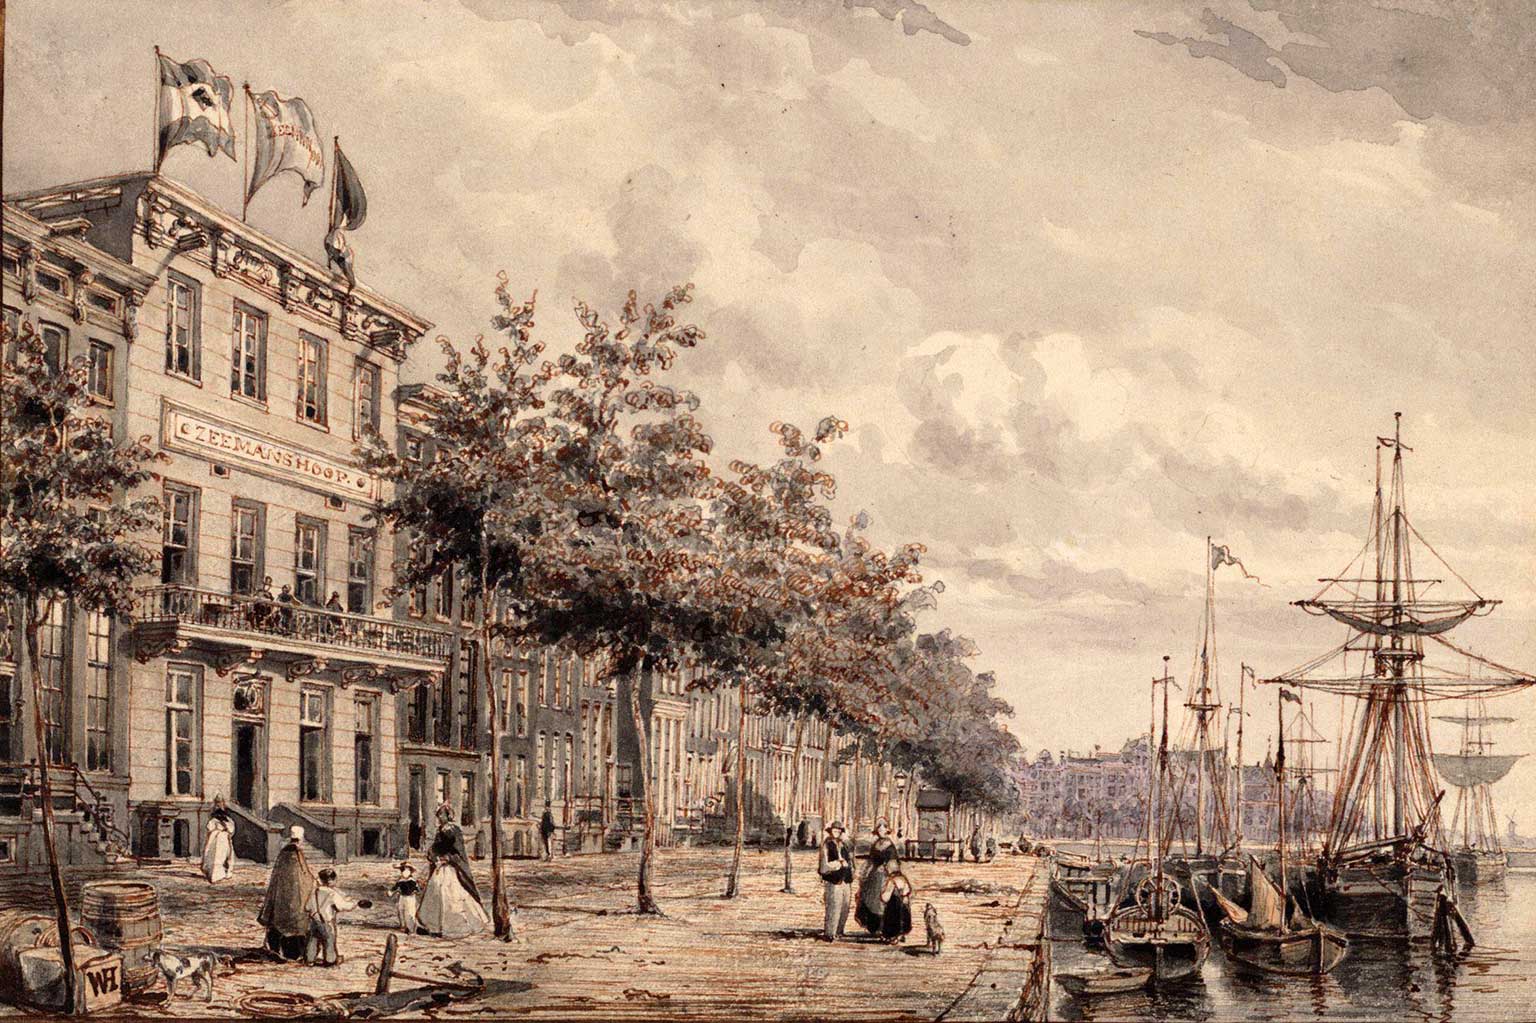 Zeemanshoop at Prins Hendrikkade 142, Amsterdam, around 1850, drawing by Willem Hekking